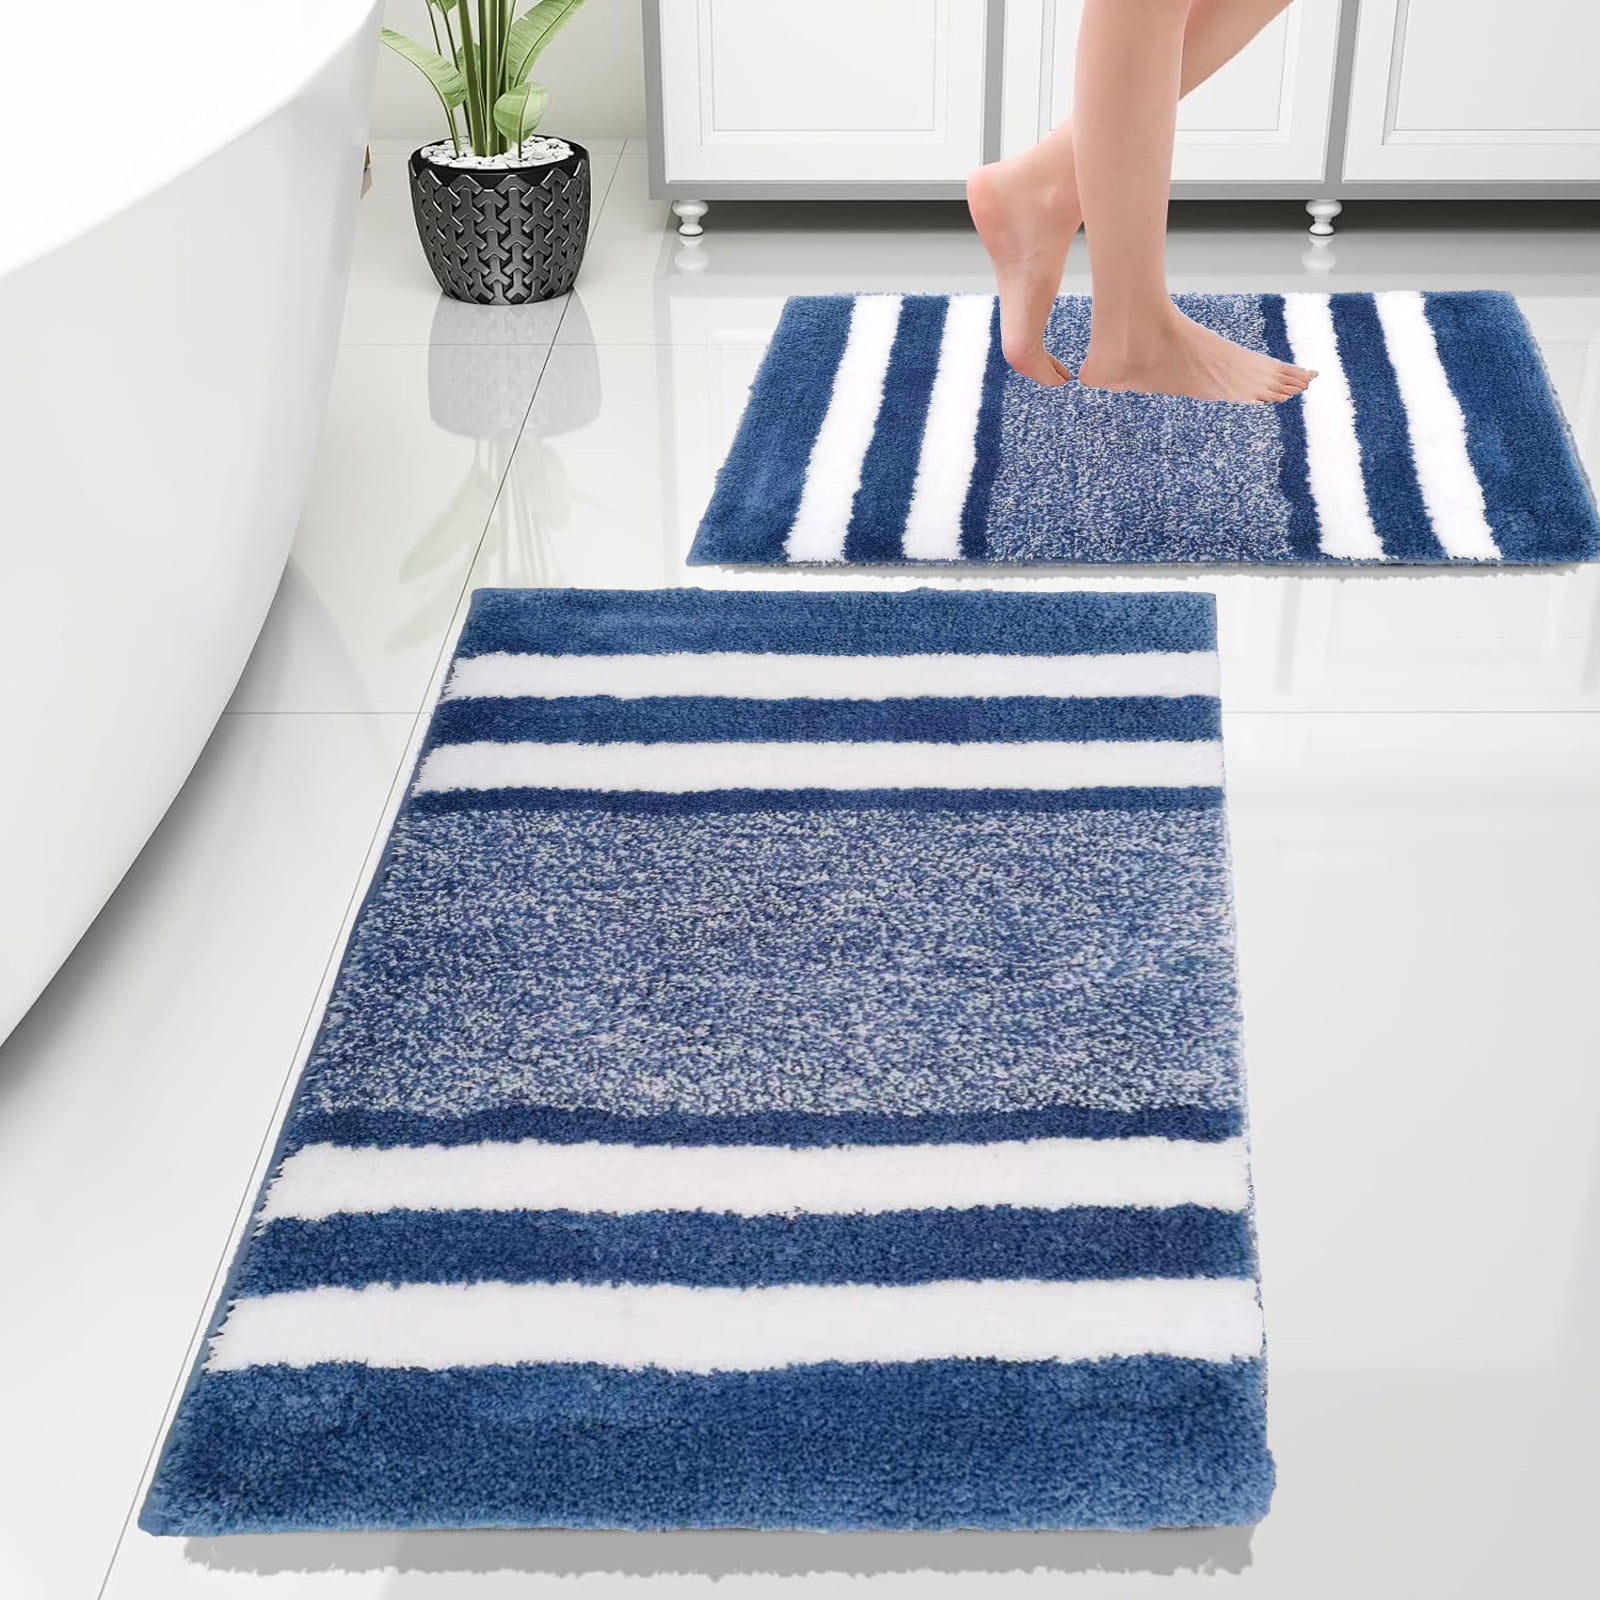 DanceeMangoo Bath Rug Mat Super Absorbent Bathroom Floor Mat Quick-Dry  Microfiber Bath Rugs Non-Slip Easy to Clean Shower Carpet(Square Blue,  20X32)